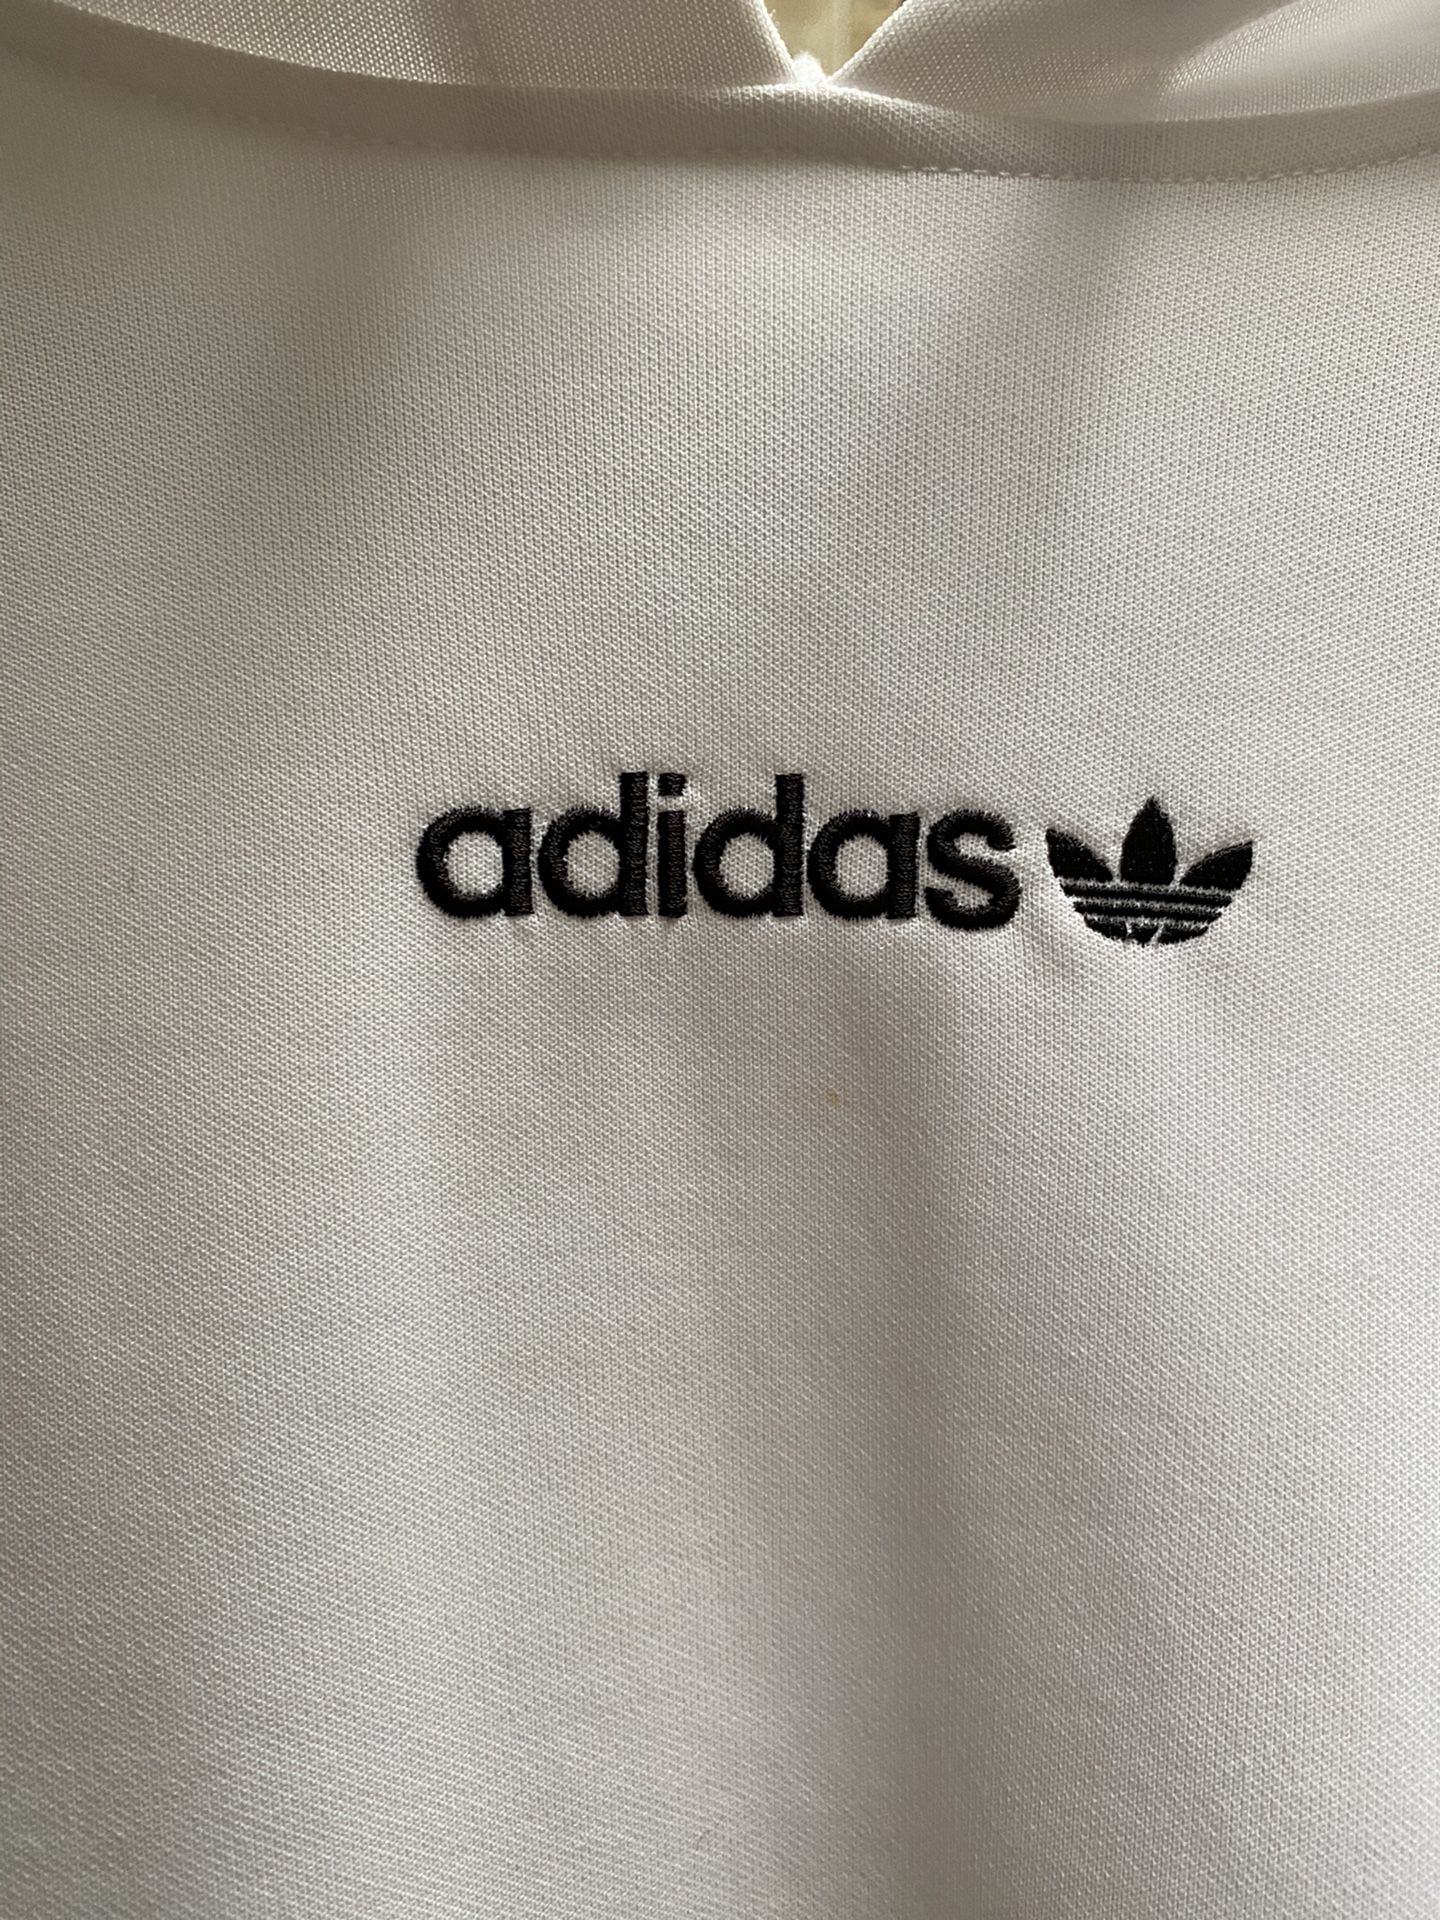 Adidas hoodie men’s extra large